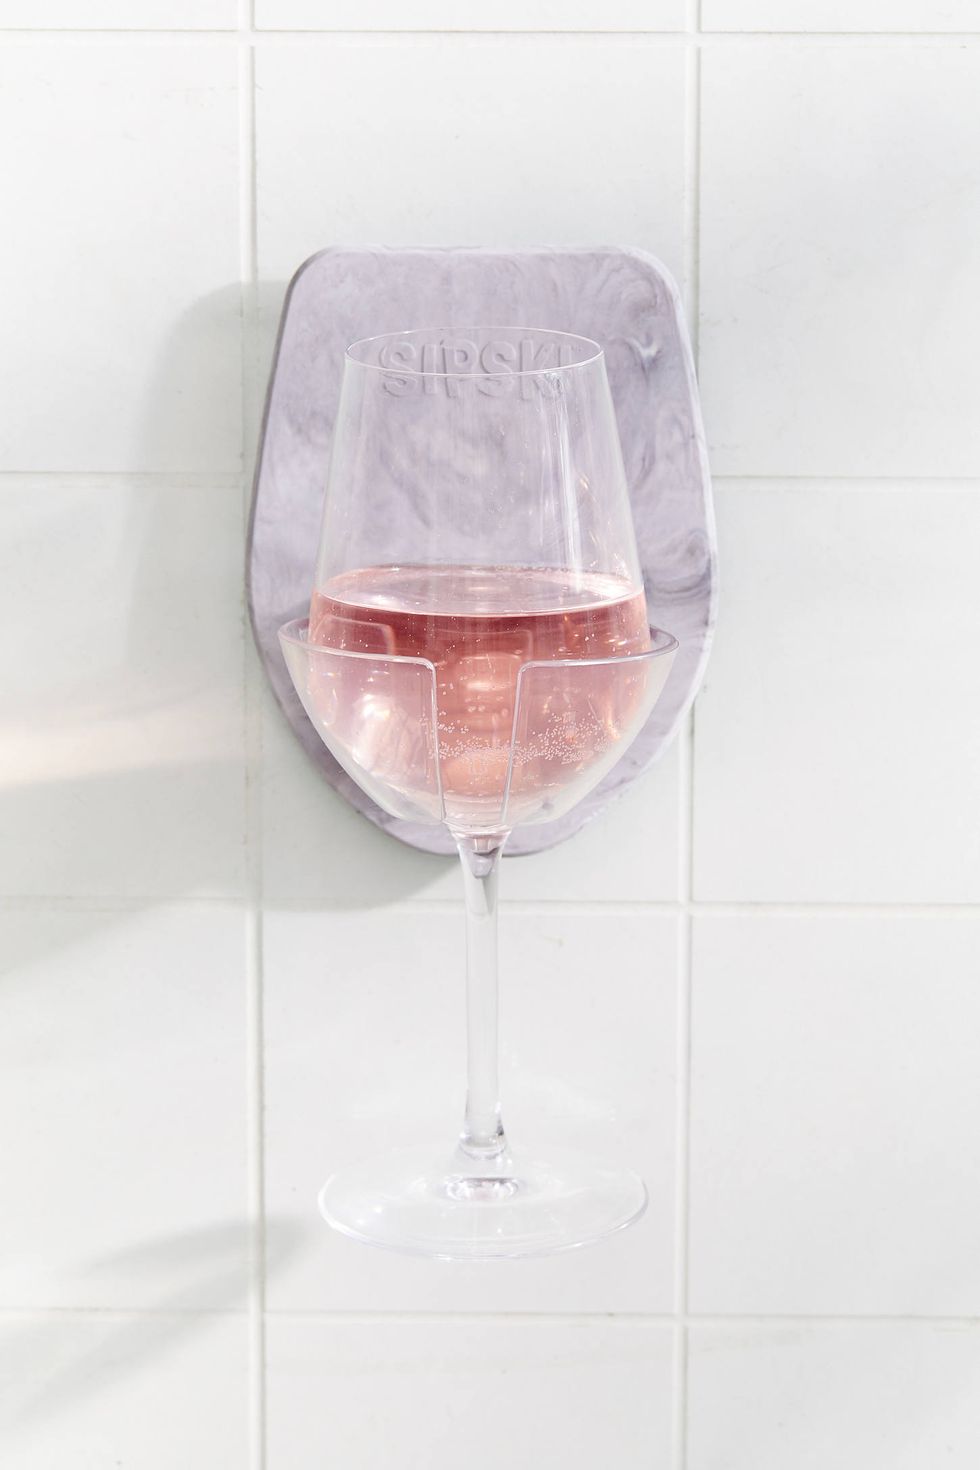 Sipski Shower Wine Glass Holder